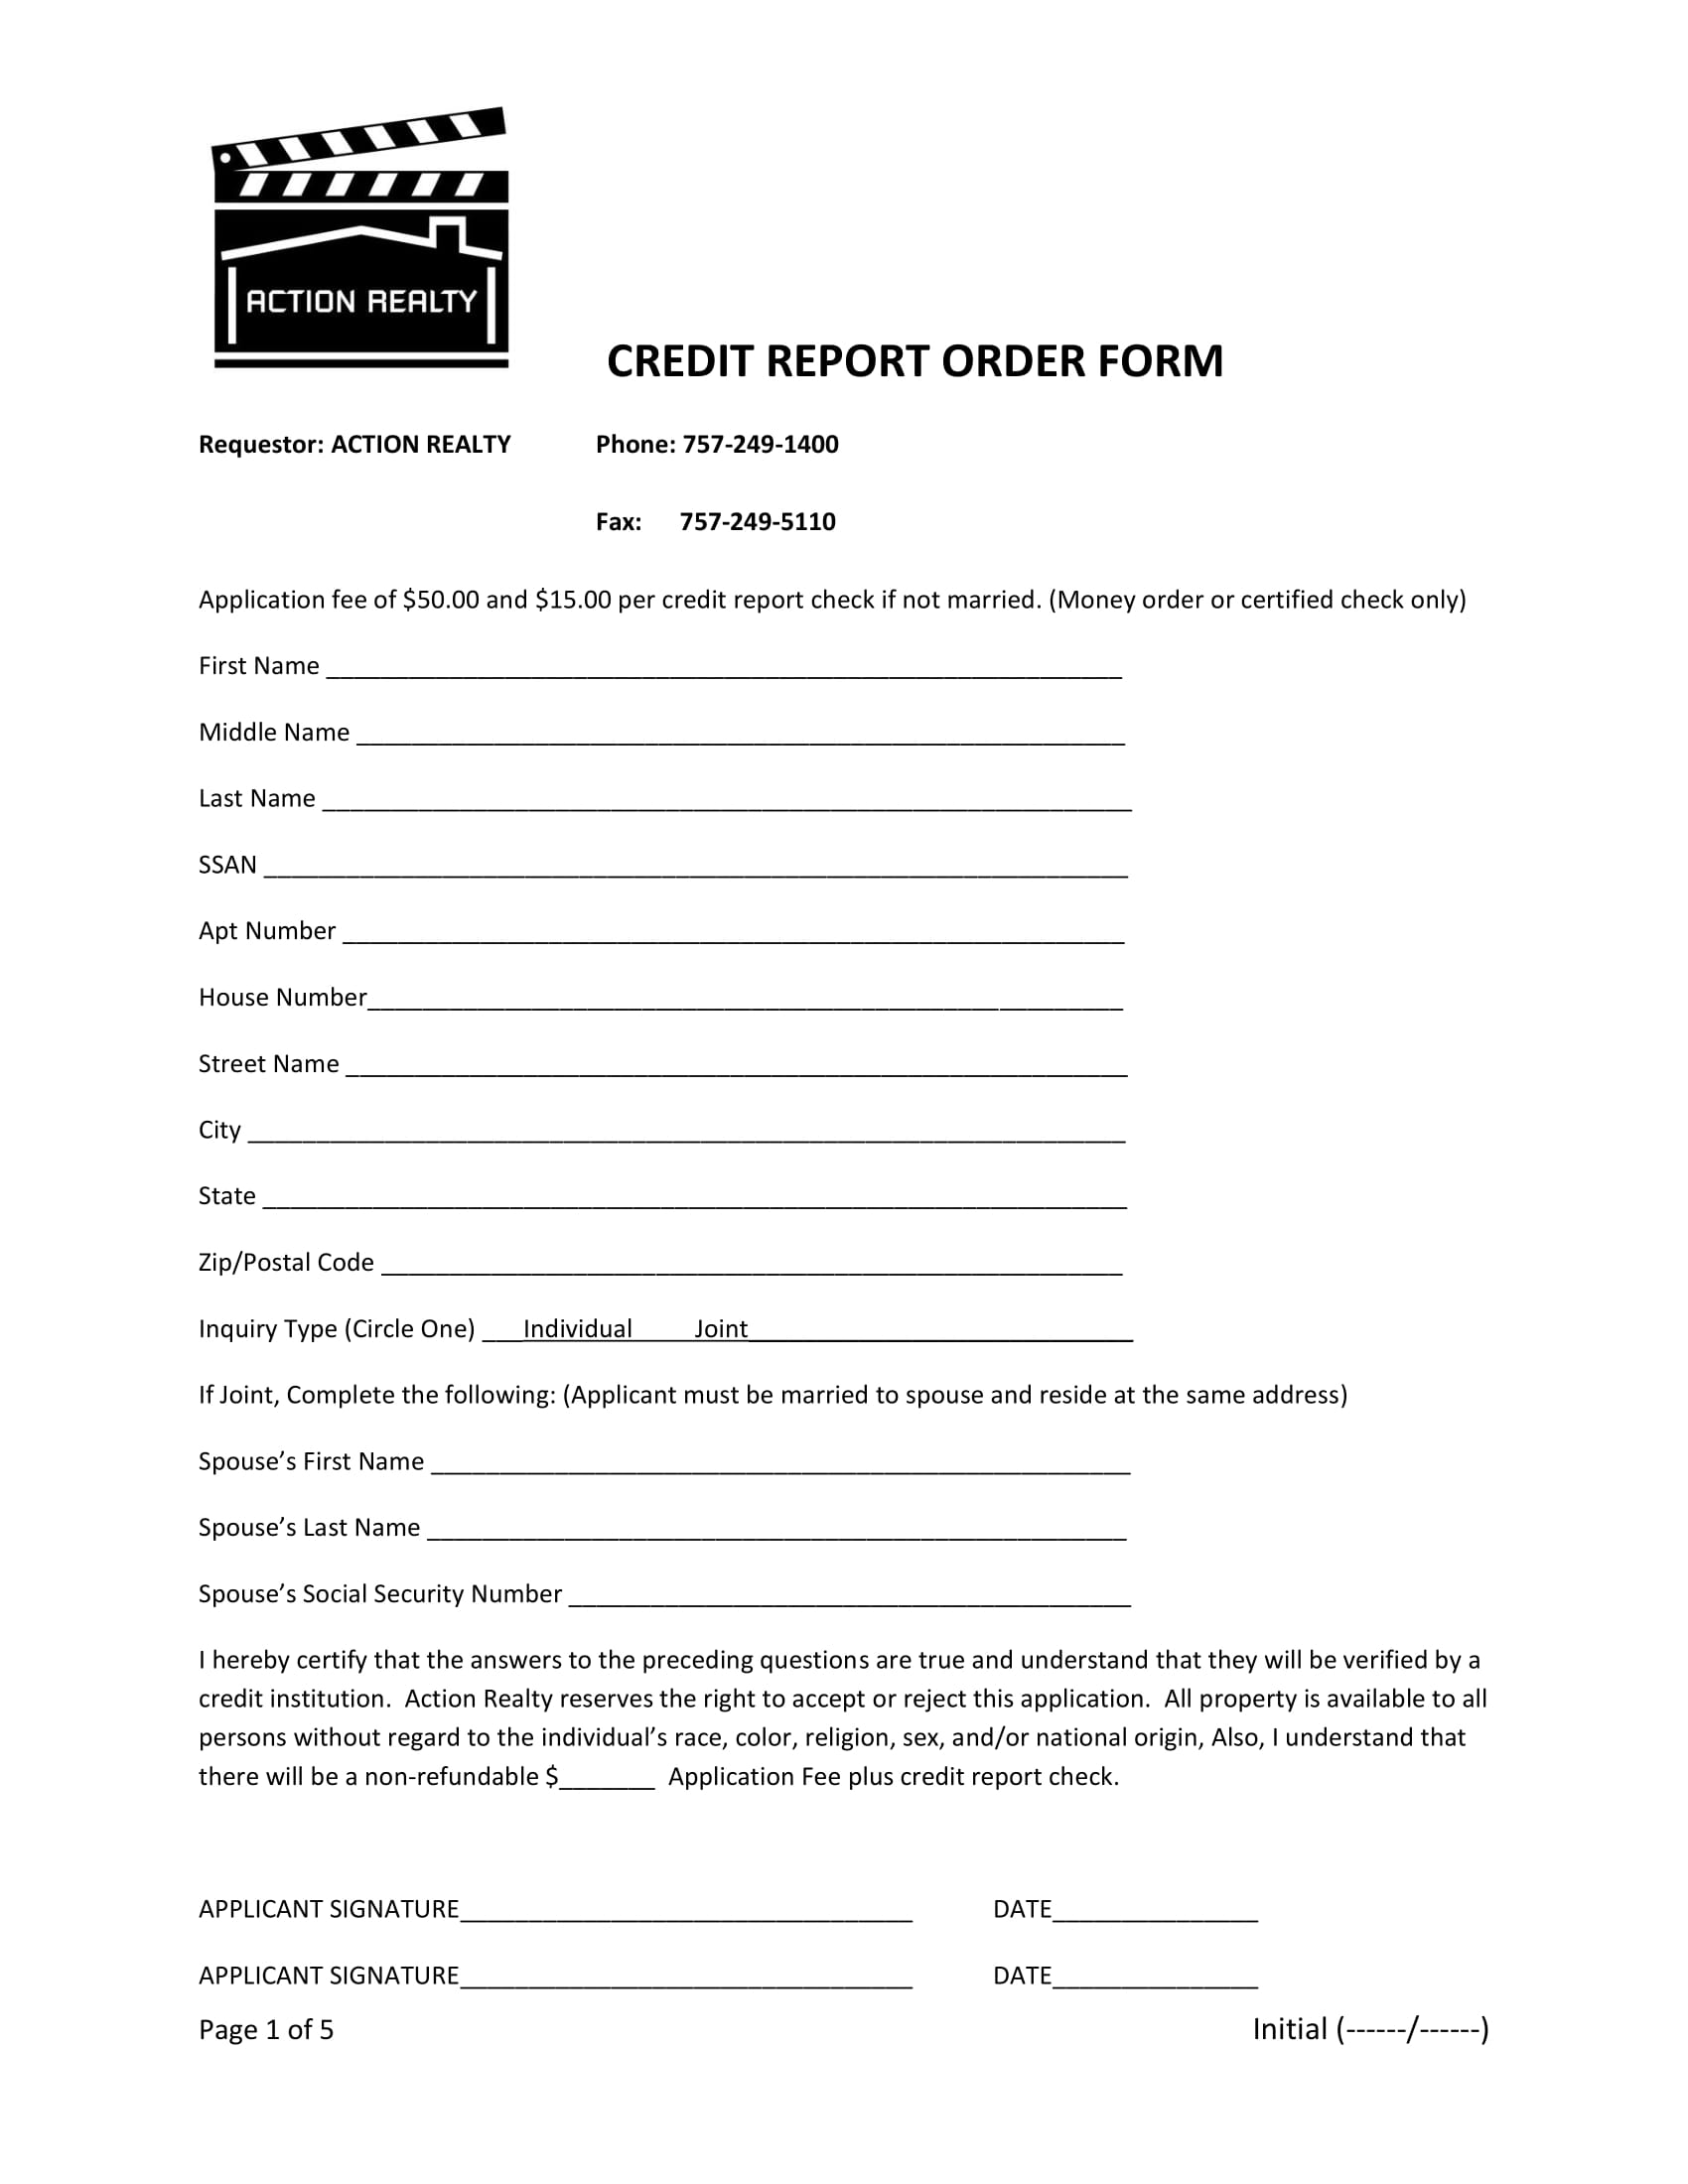 credit report order sample form 01